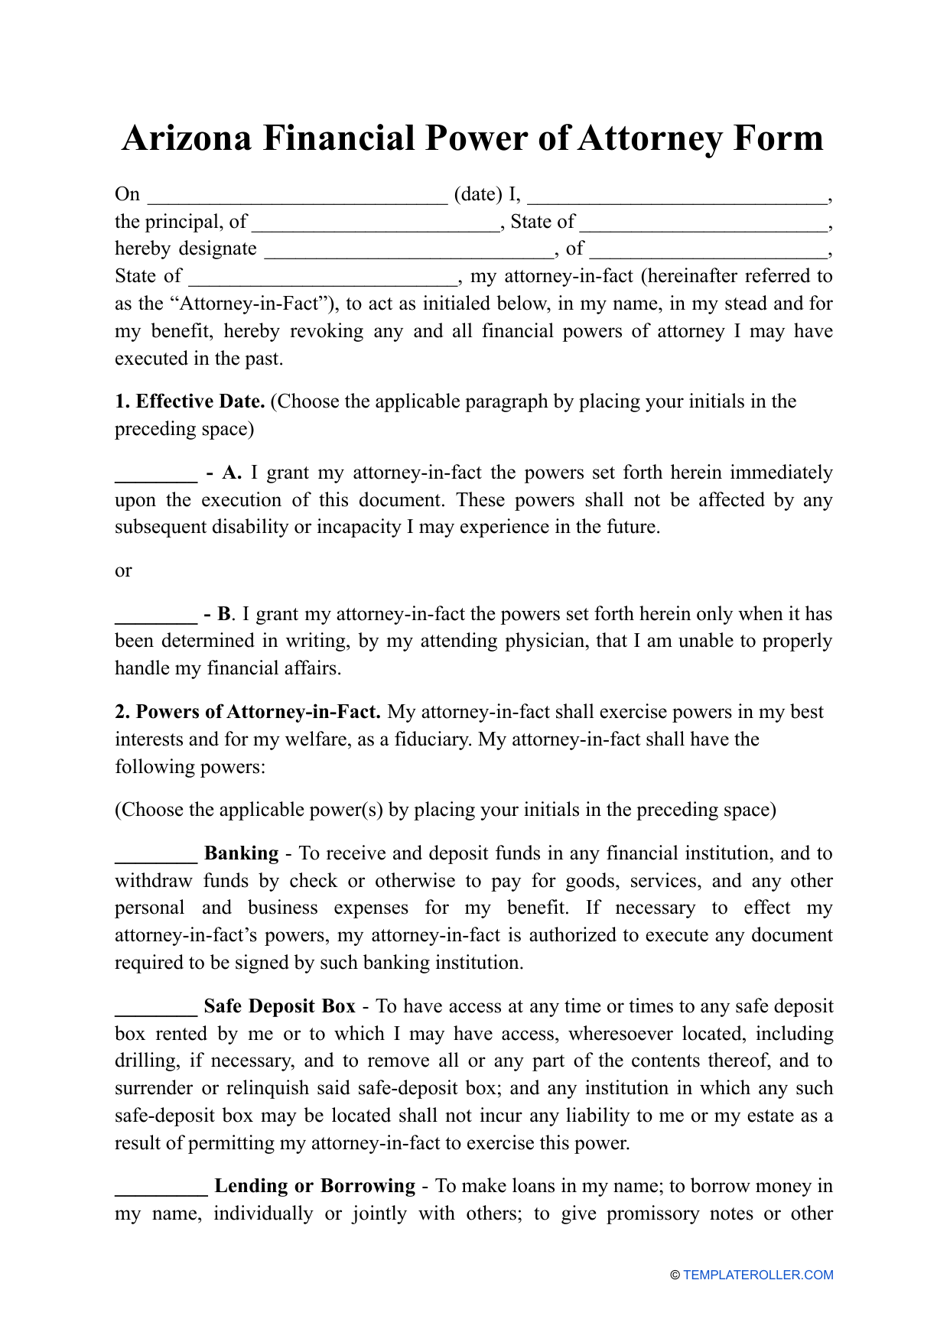 Financial Power of Attorney Form - Arizona, Page 1